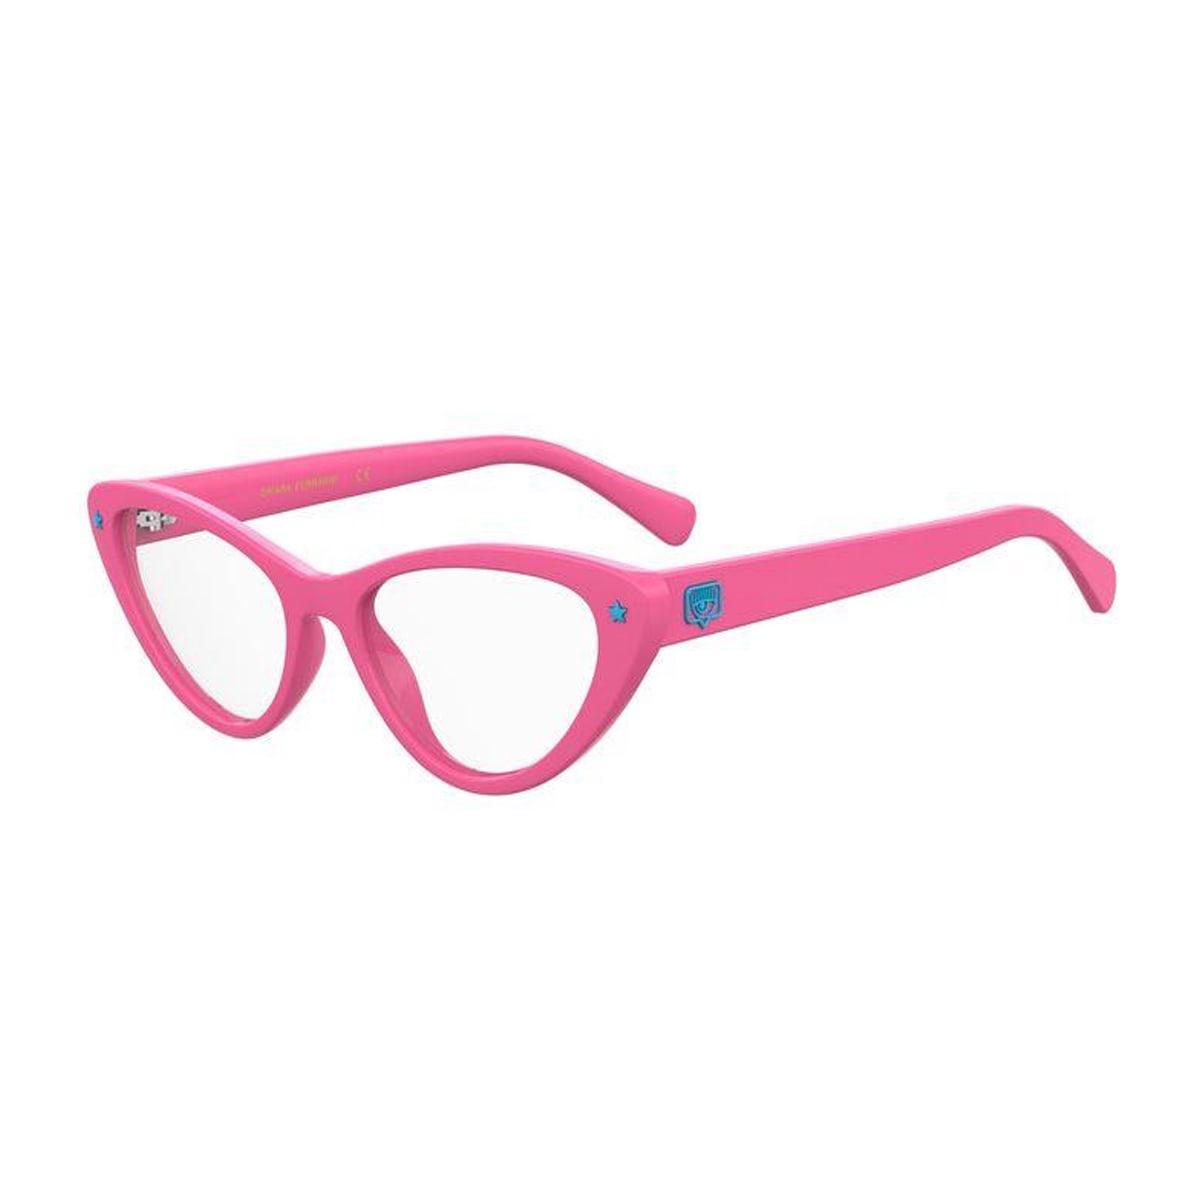 Cf 7012 Pink Glasses